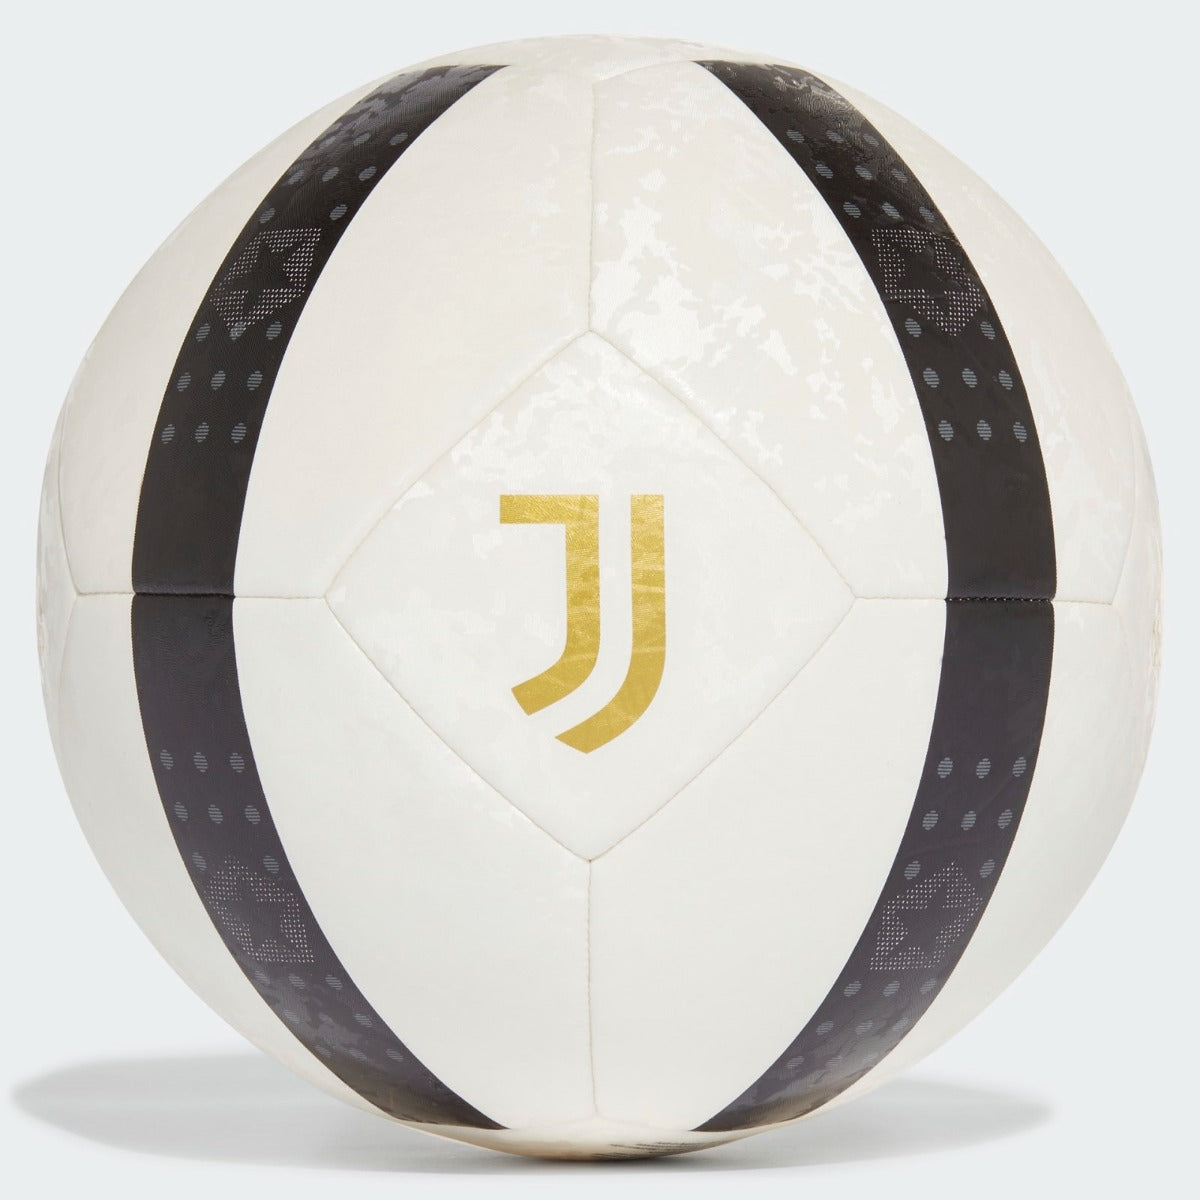 Adidas 2021-22 Juventus Home Club Ball - White-Black-Gold (Front)